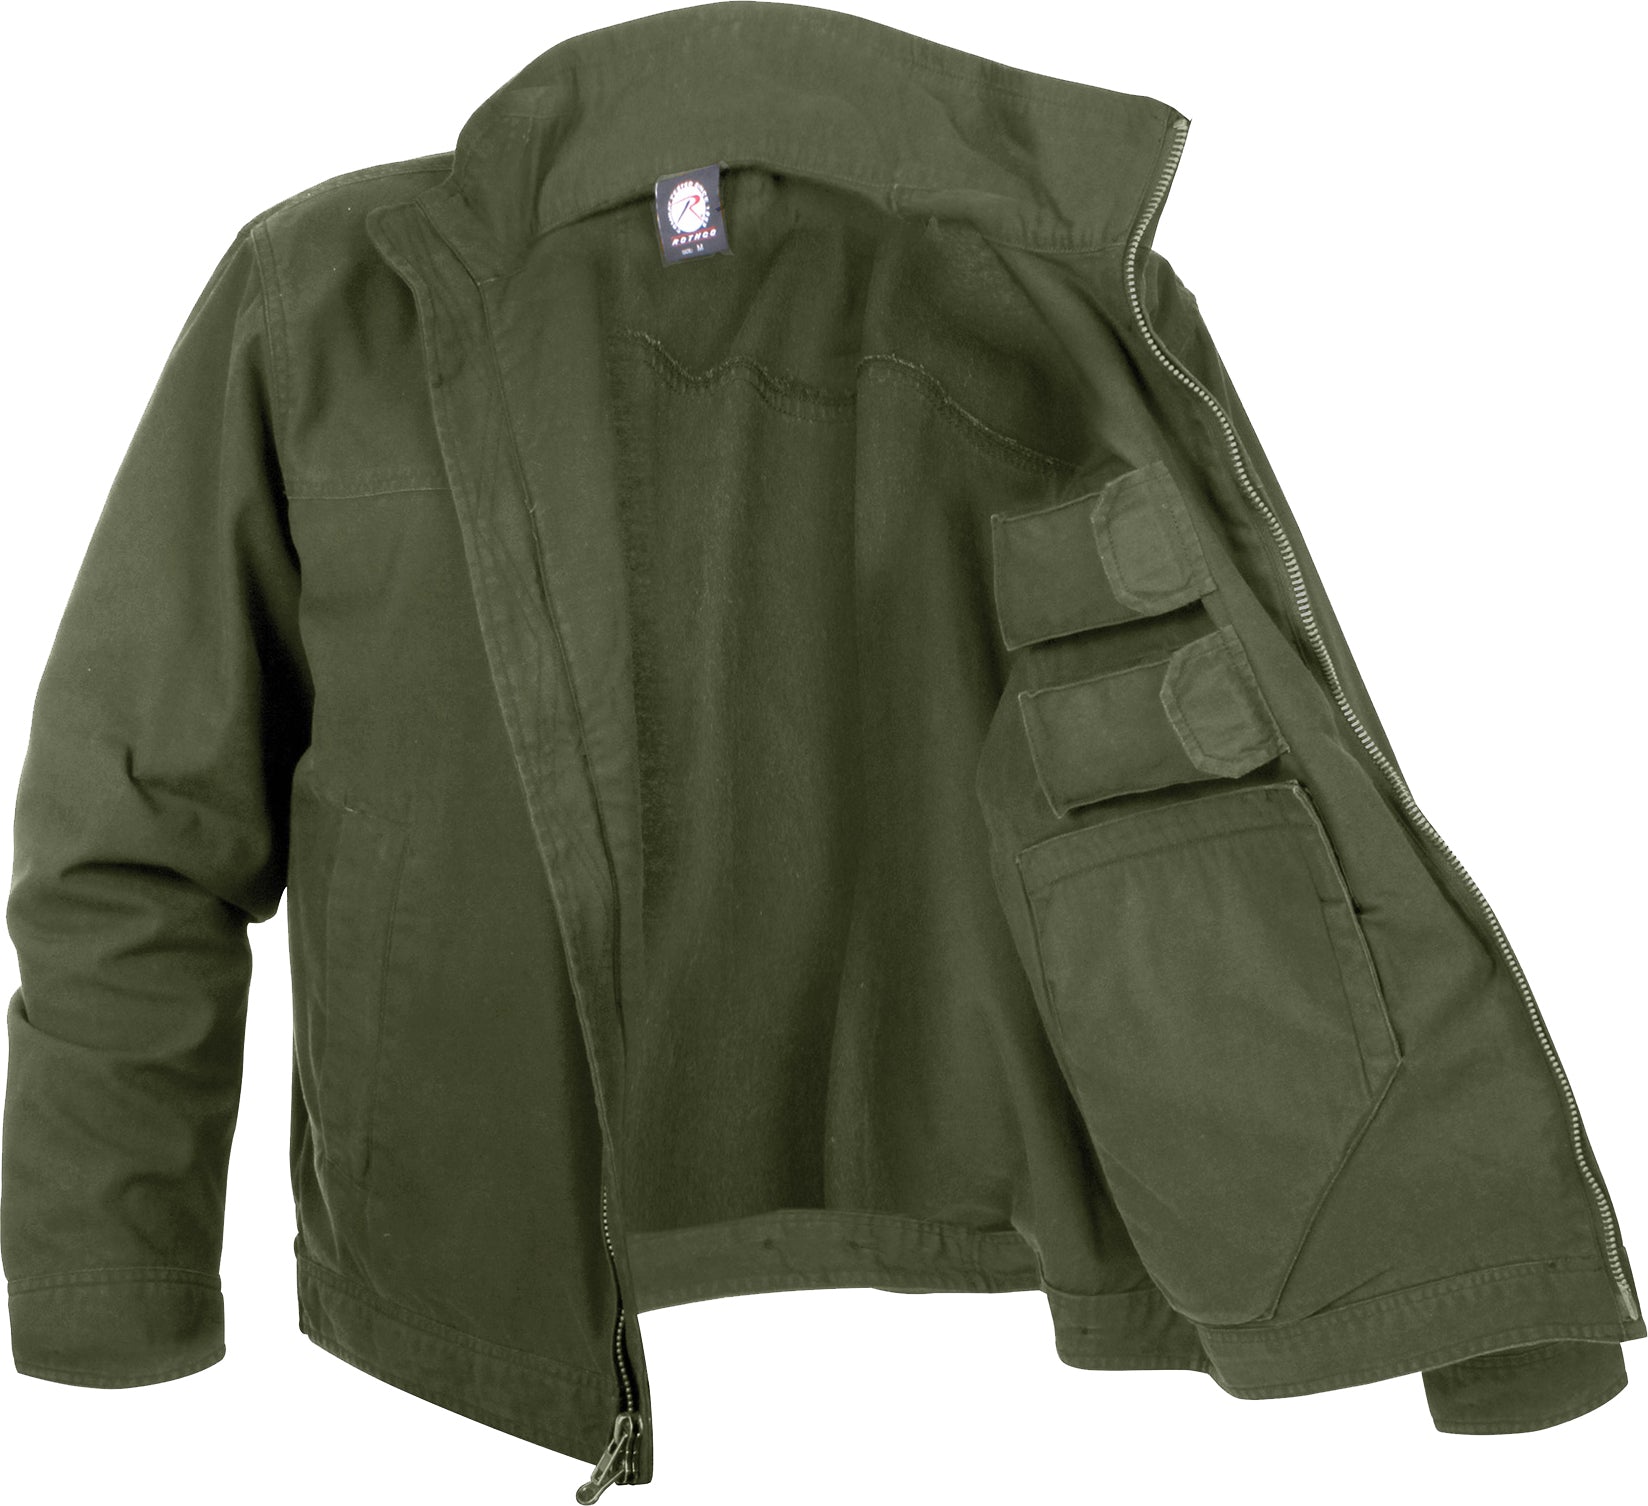 Olive Drab - Lightweight Concealed Carry Jacket